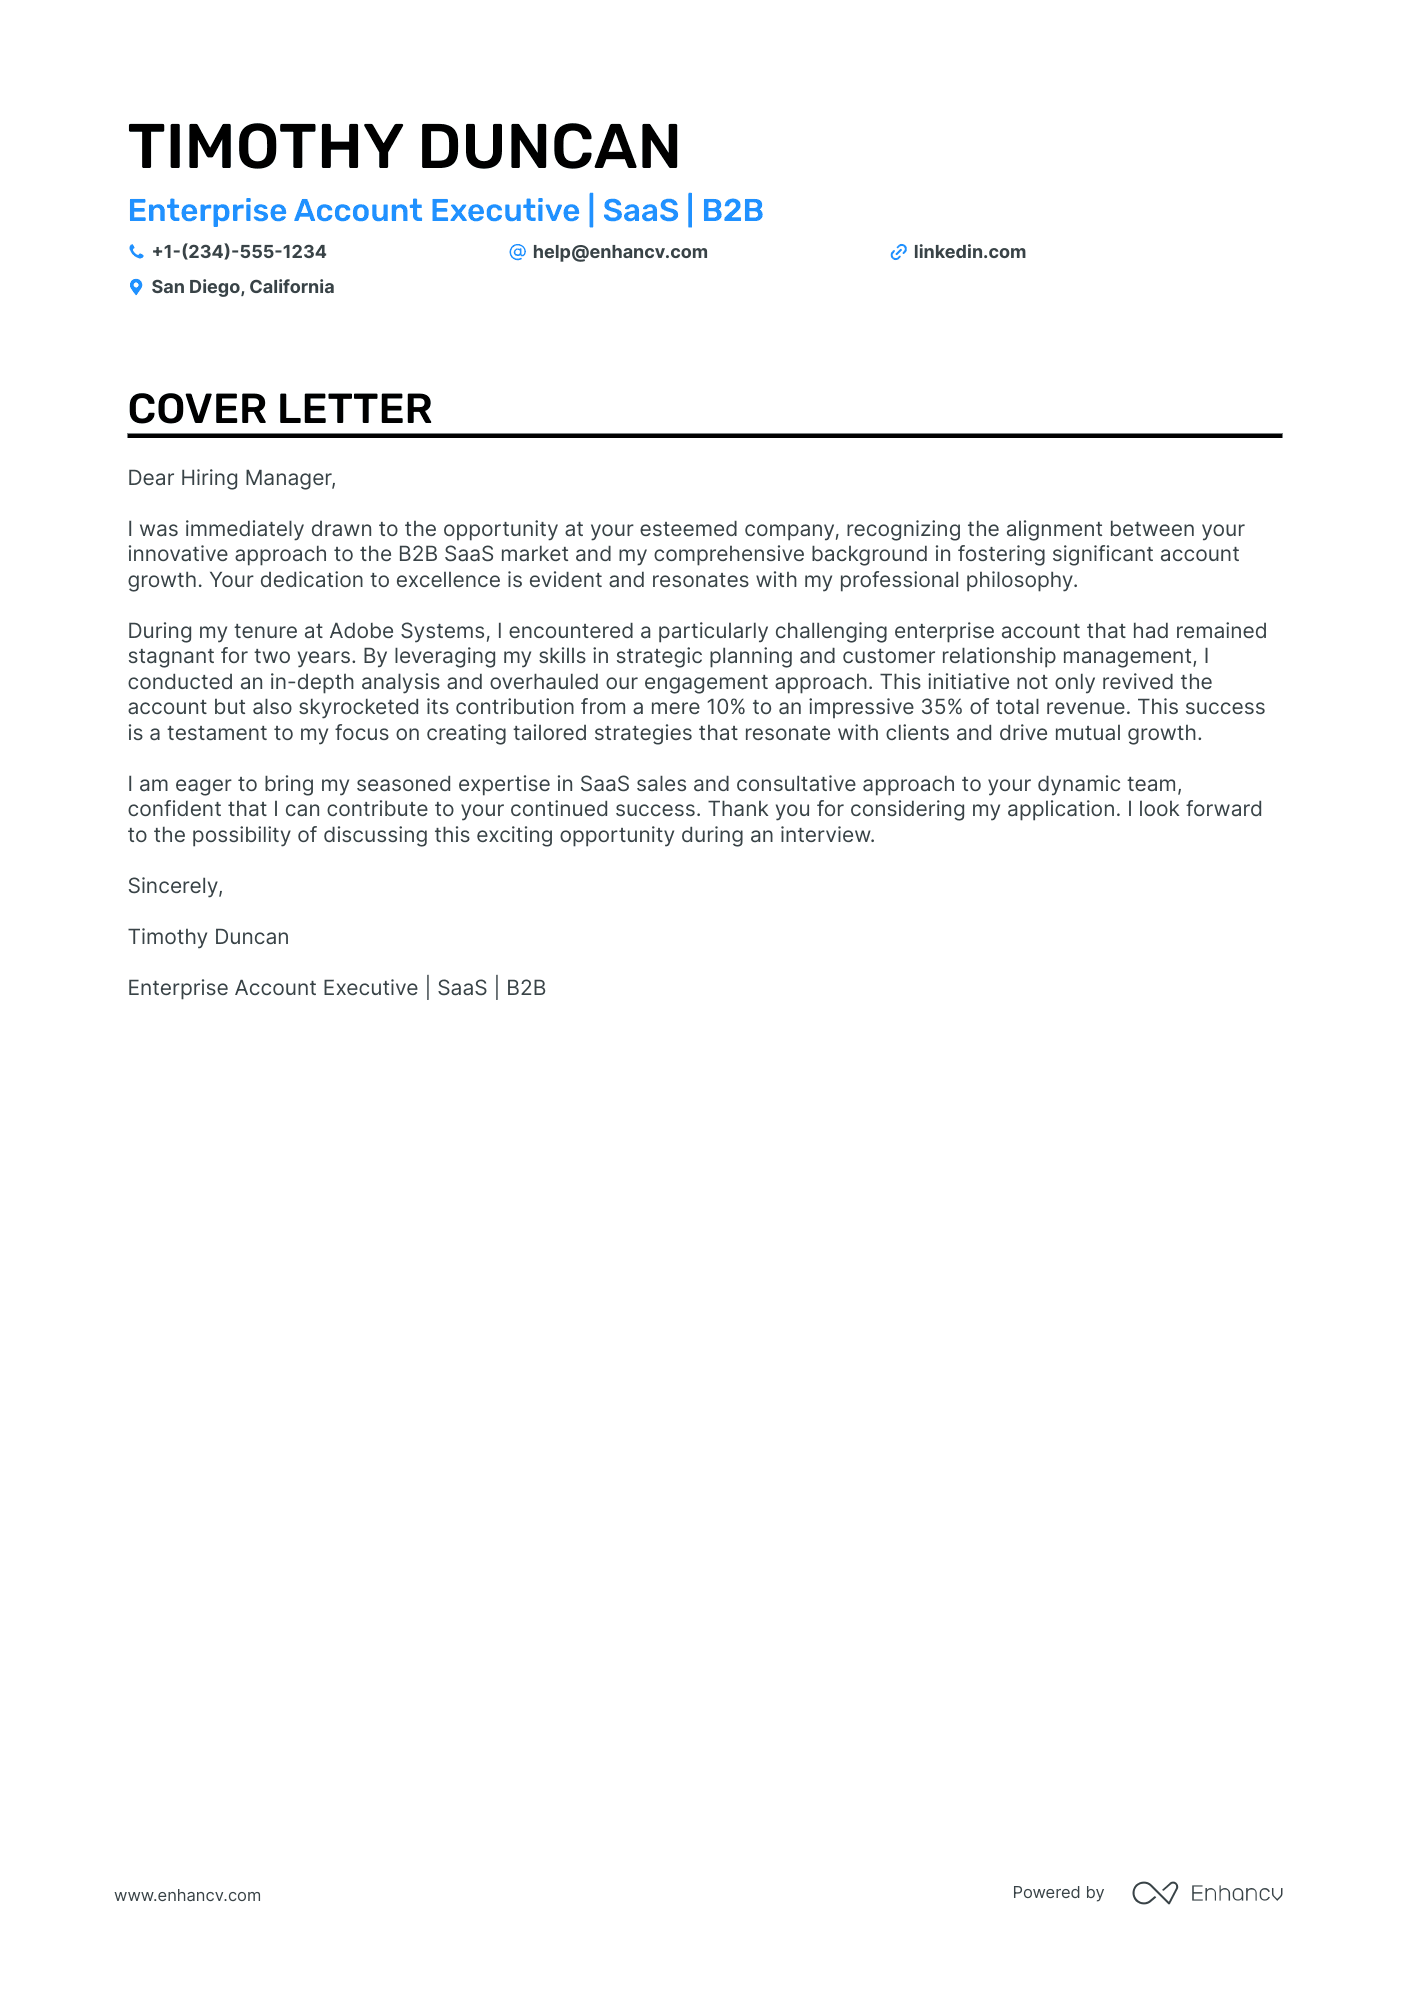 Enterprise Account Executive cover letter